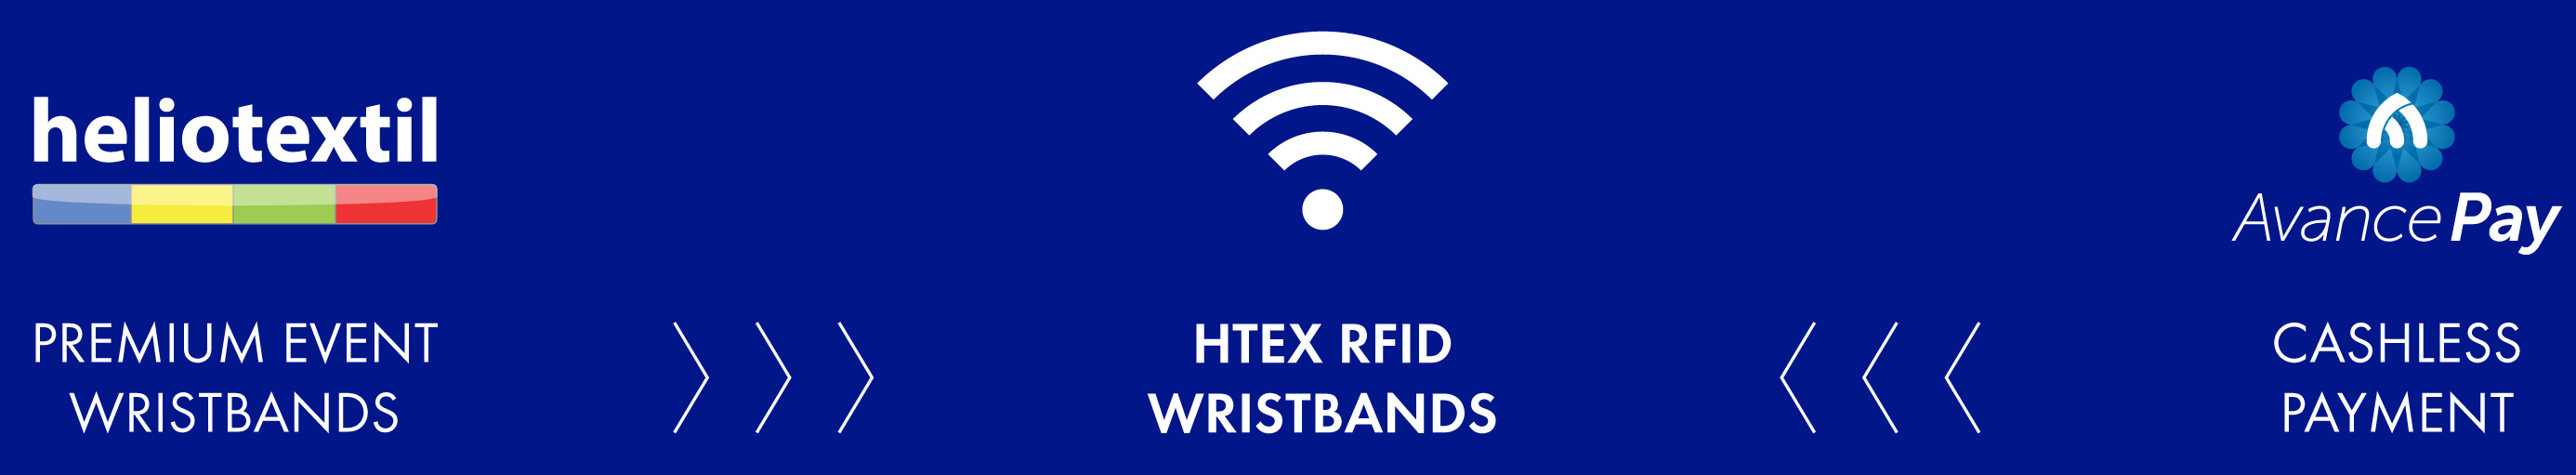 Heliotextil AvancePay RFID NFC Wristbands